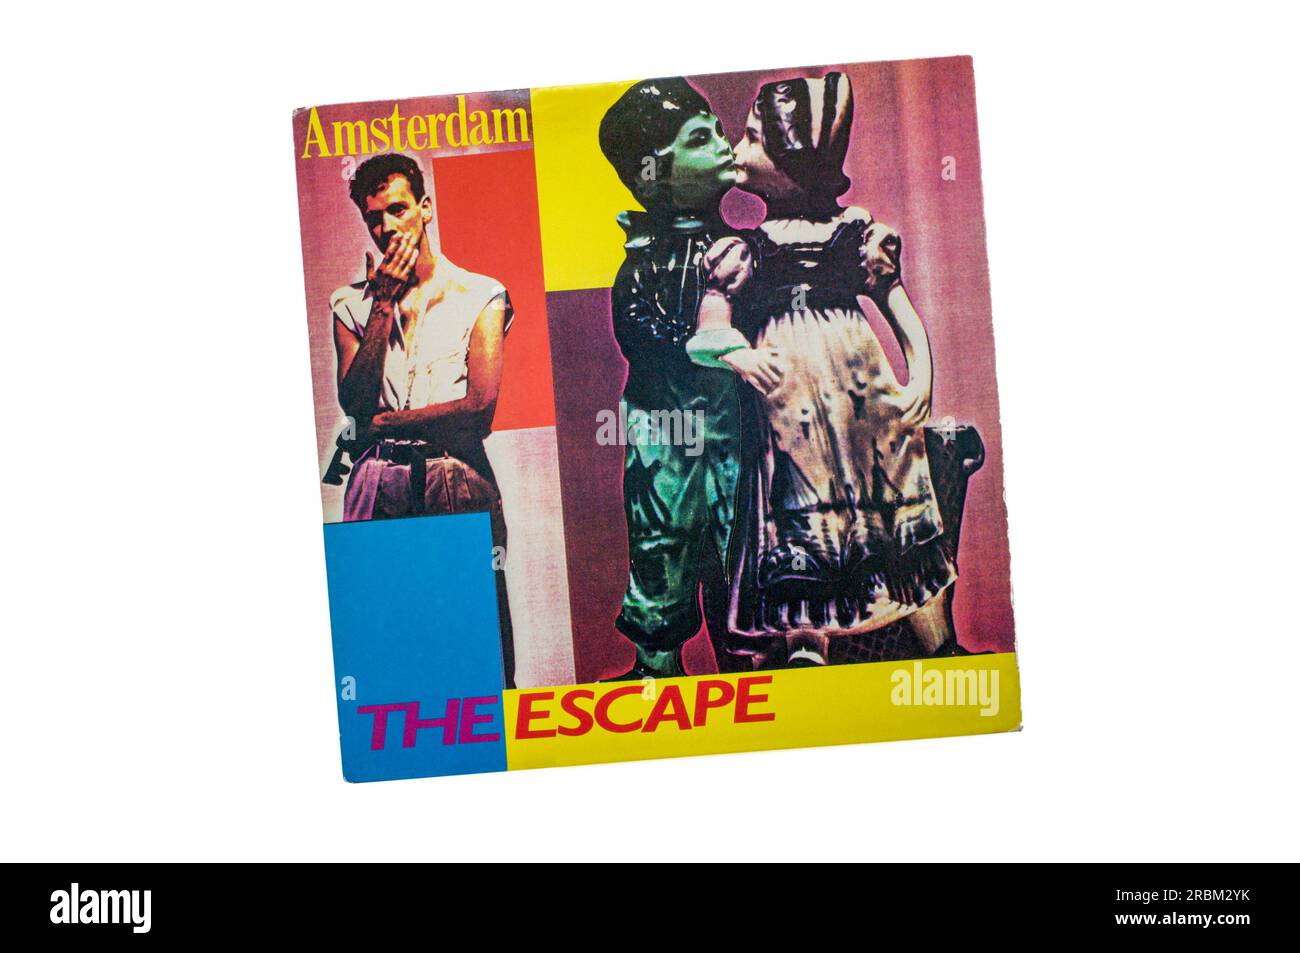 Single 1983 7', The Escape by Amsterdam. Banque D'Images